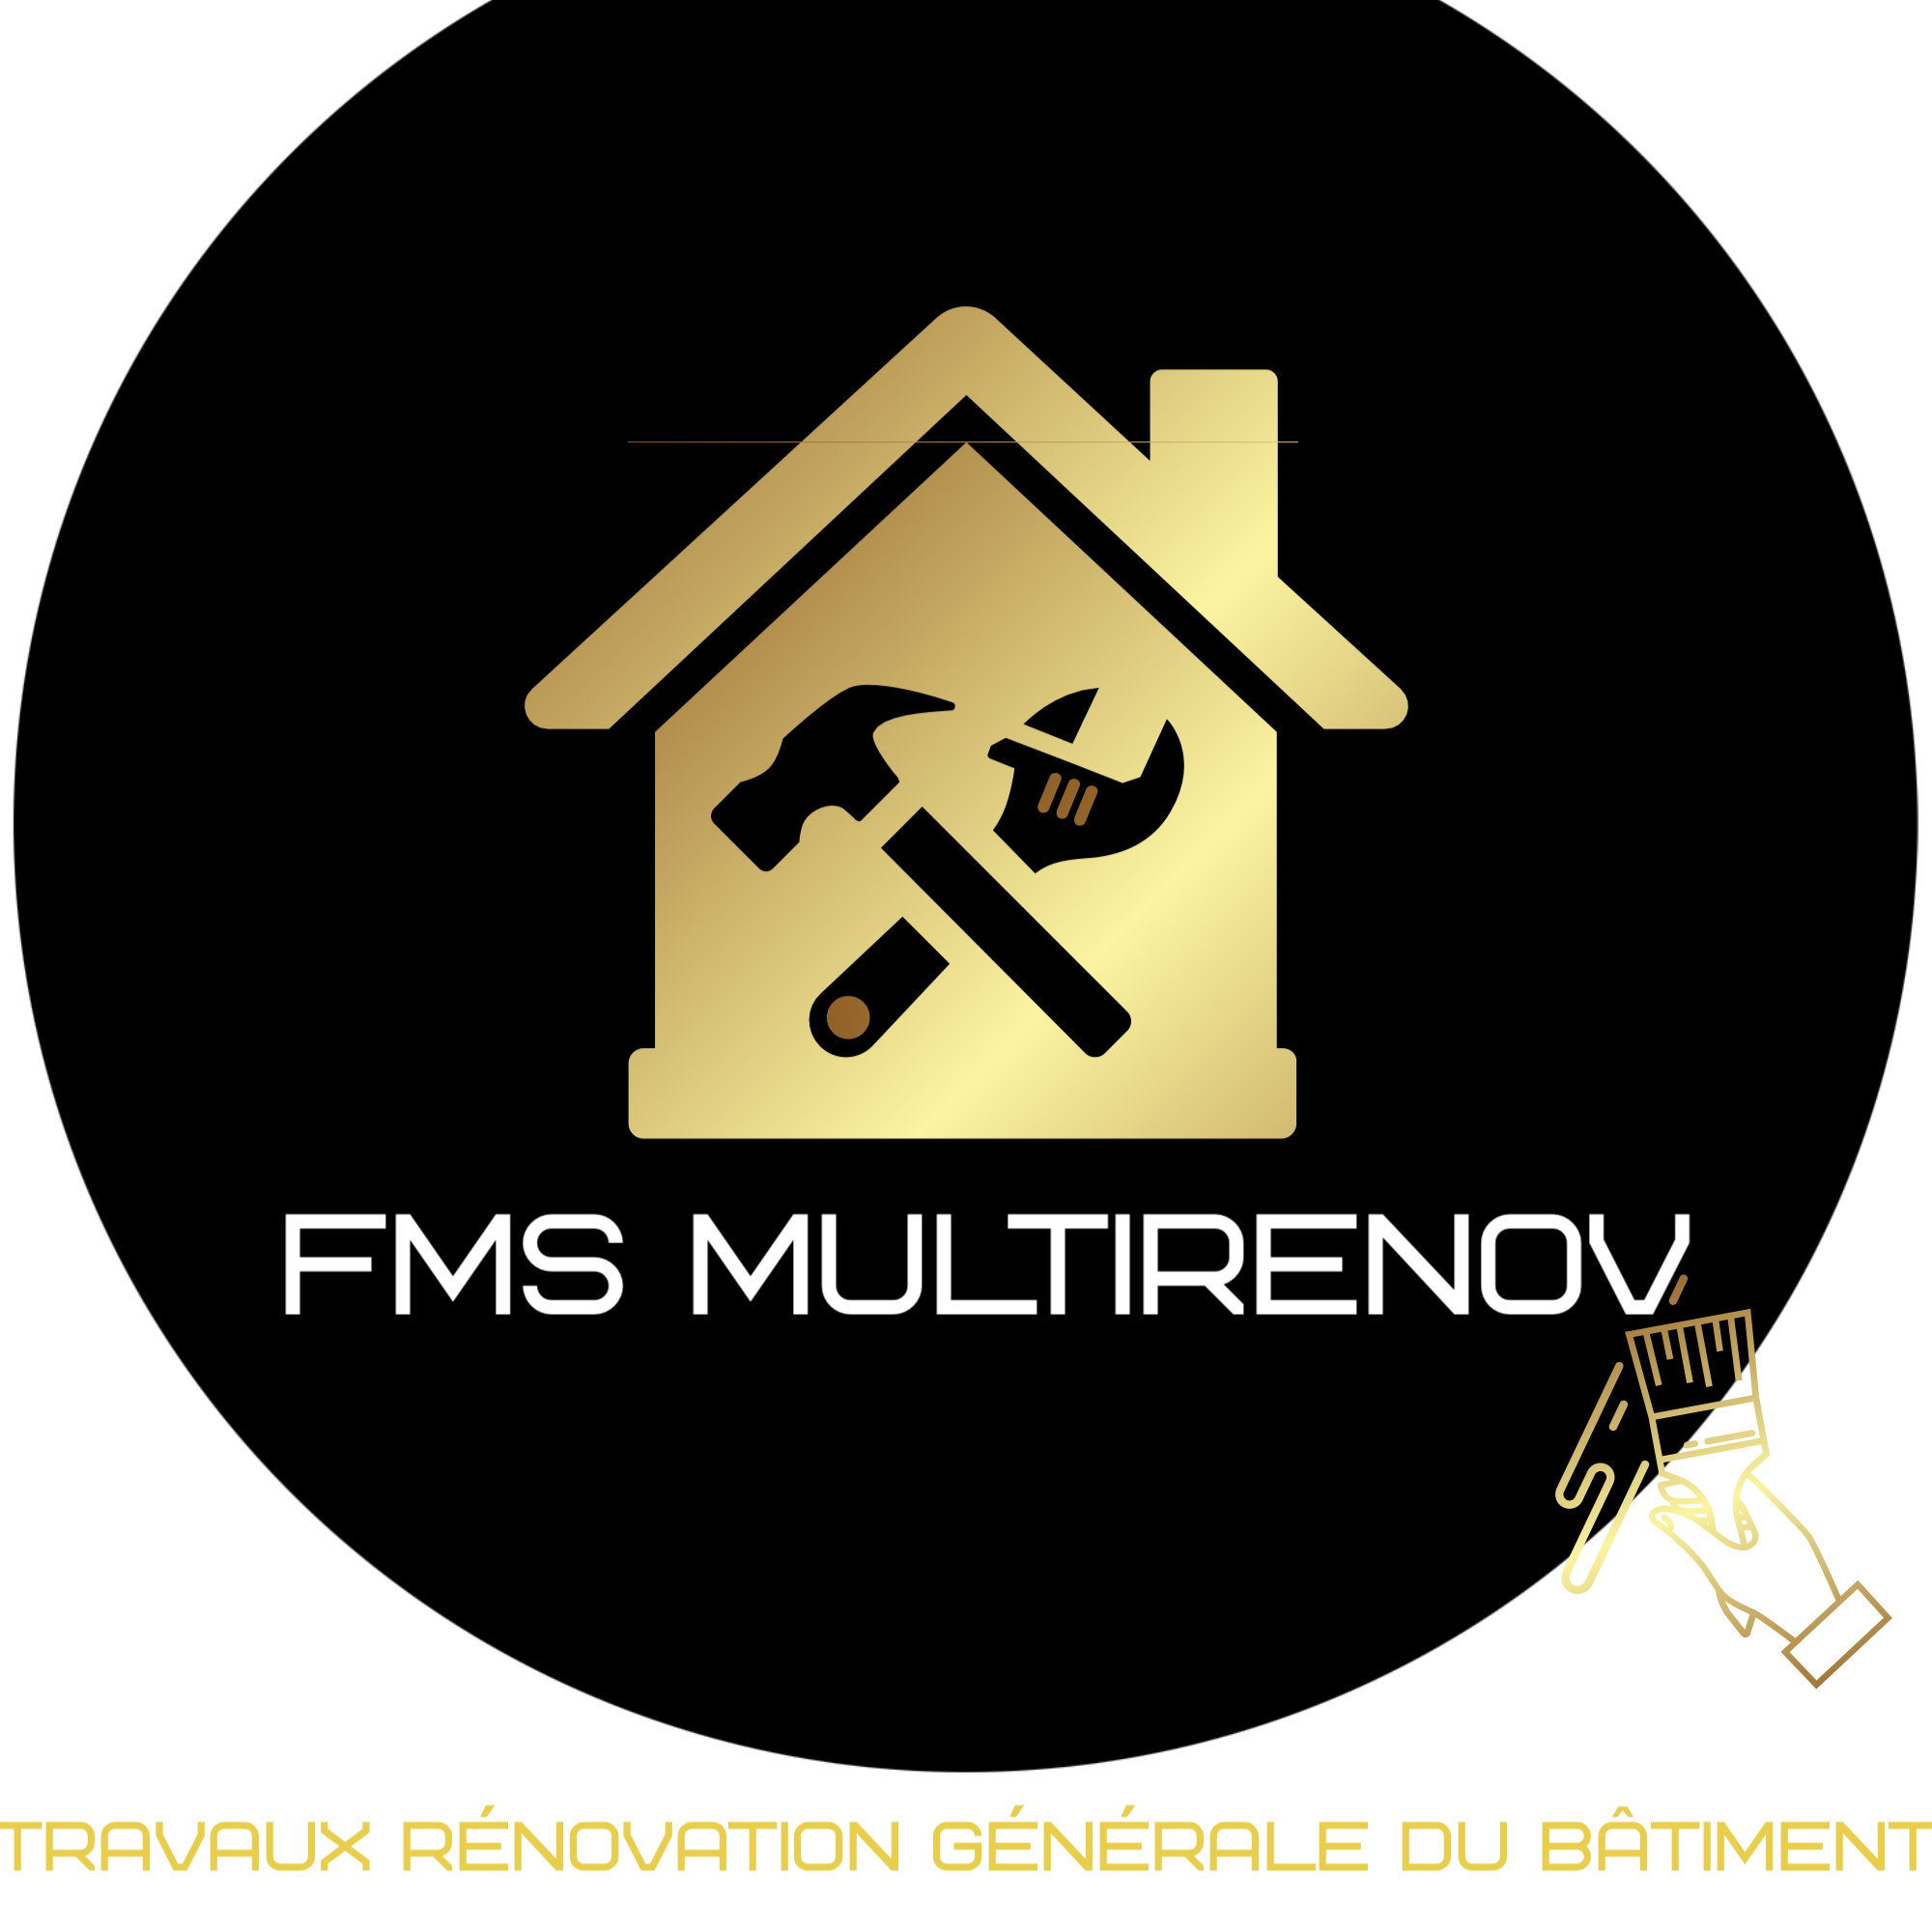 FMS MULTIRENOV